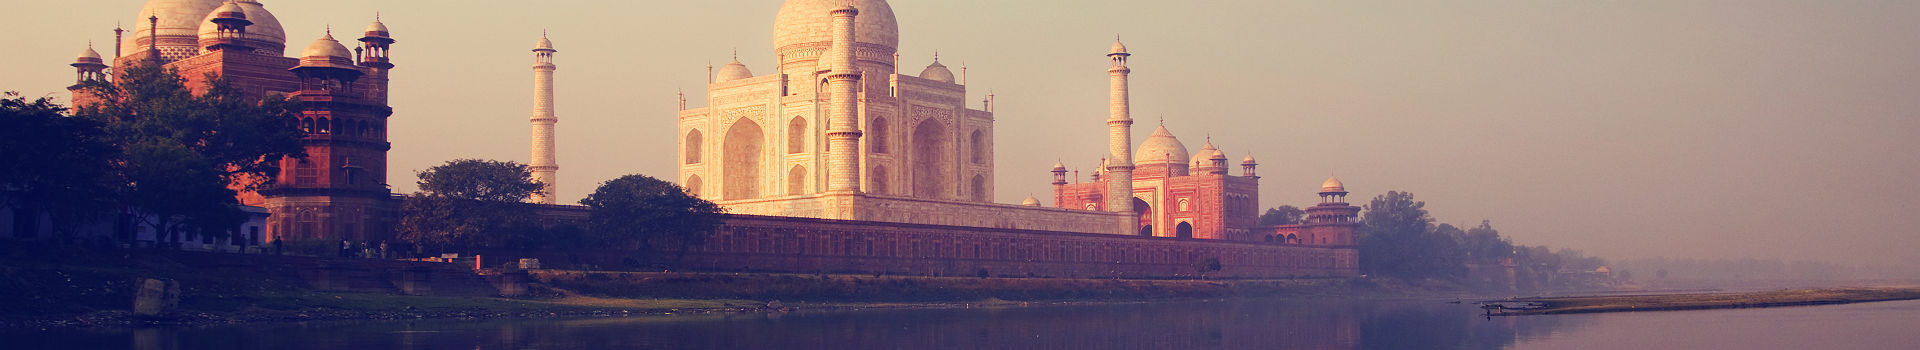 Le Taj Mahal à Agra - Inde